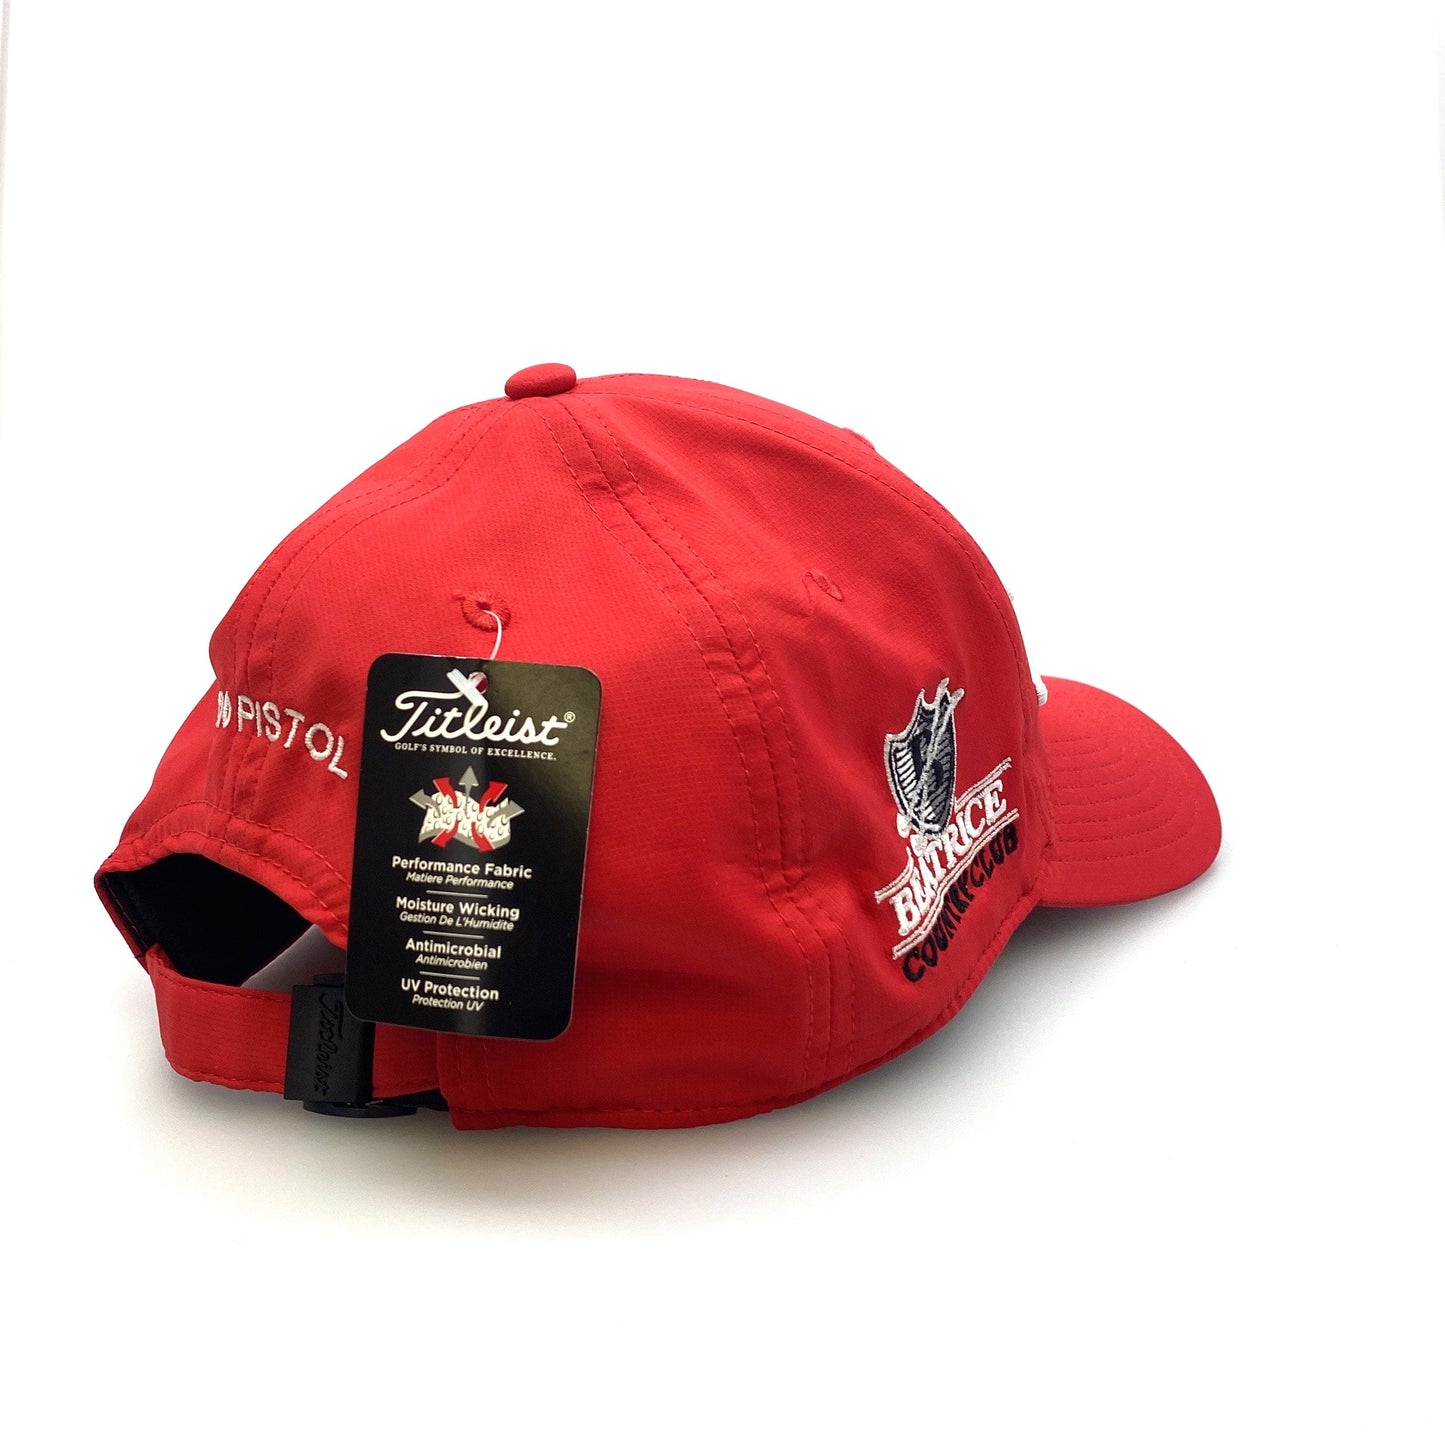 Titleist Mens Red Adjustable Golf Baseball Hat Cap Breathable - BCC 2020 Pistol